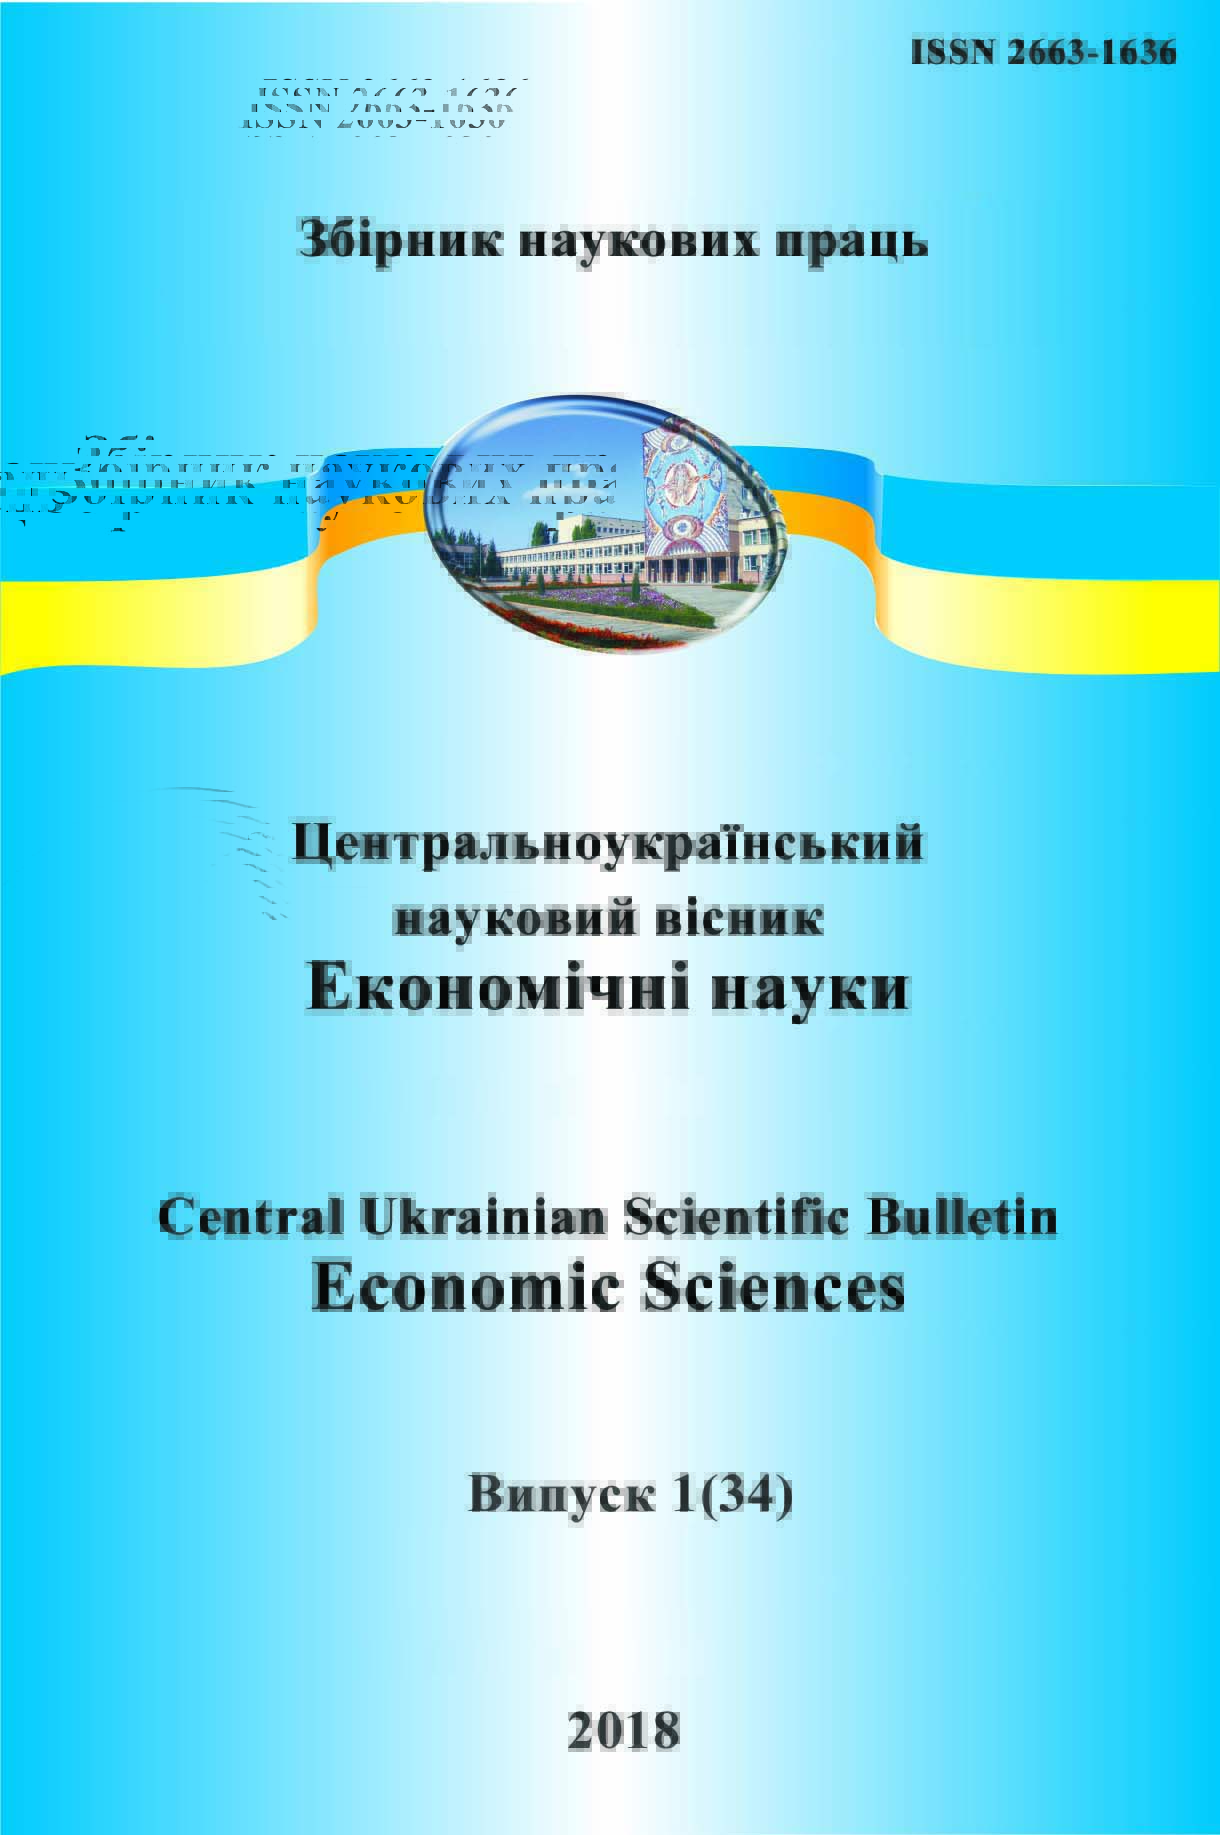 Central Ukrainian Scientific Bulletin. Economic Sciences